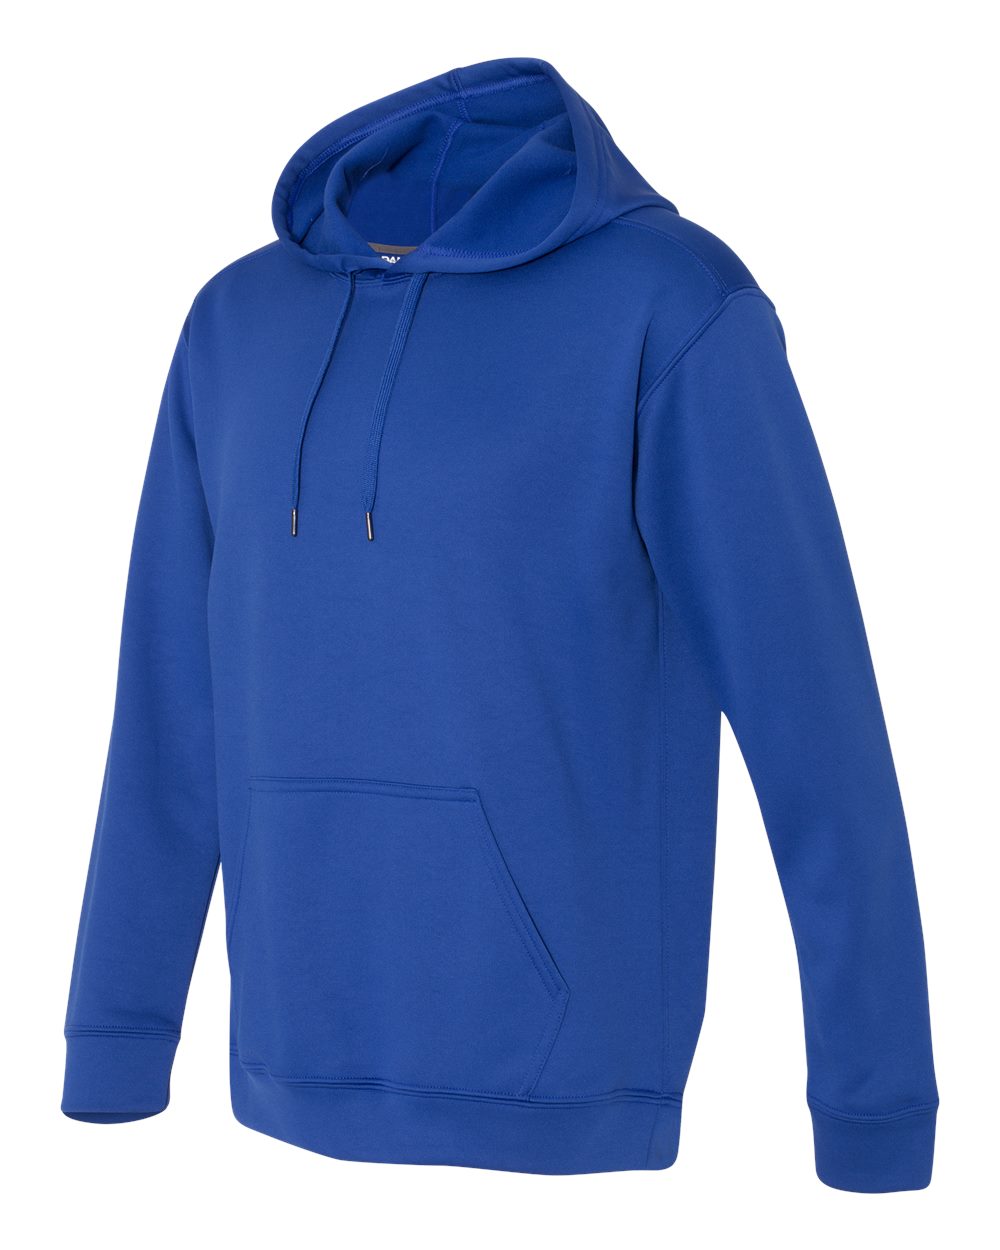 Gildan Performance Tech Hooded Pullover Sweatshirt - SHIRT PRINTING 4U